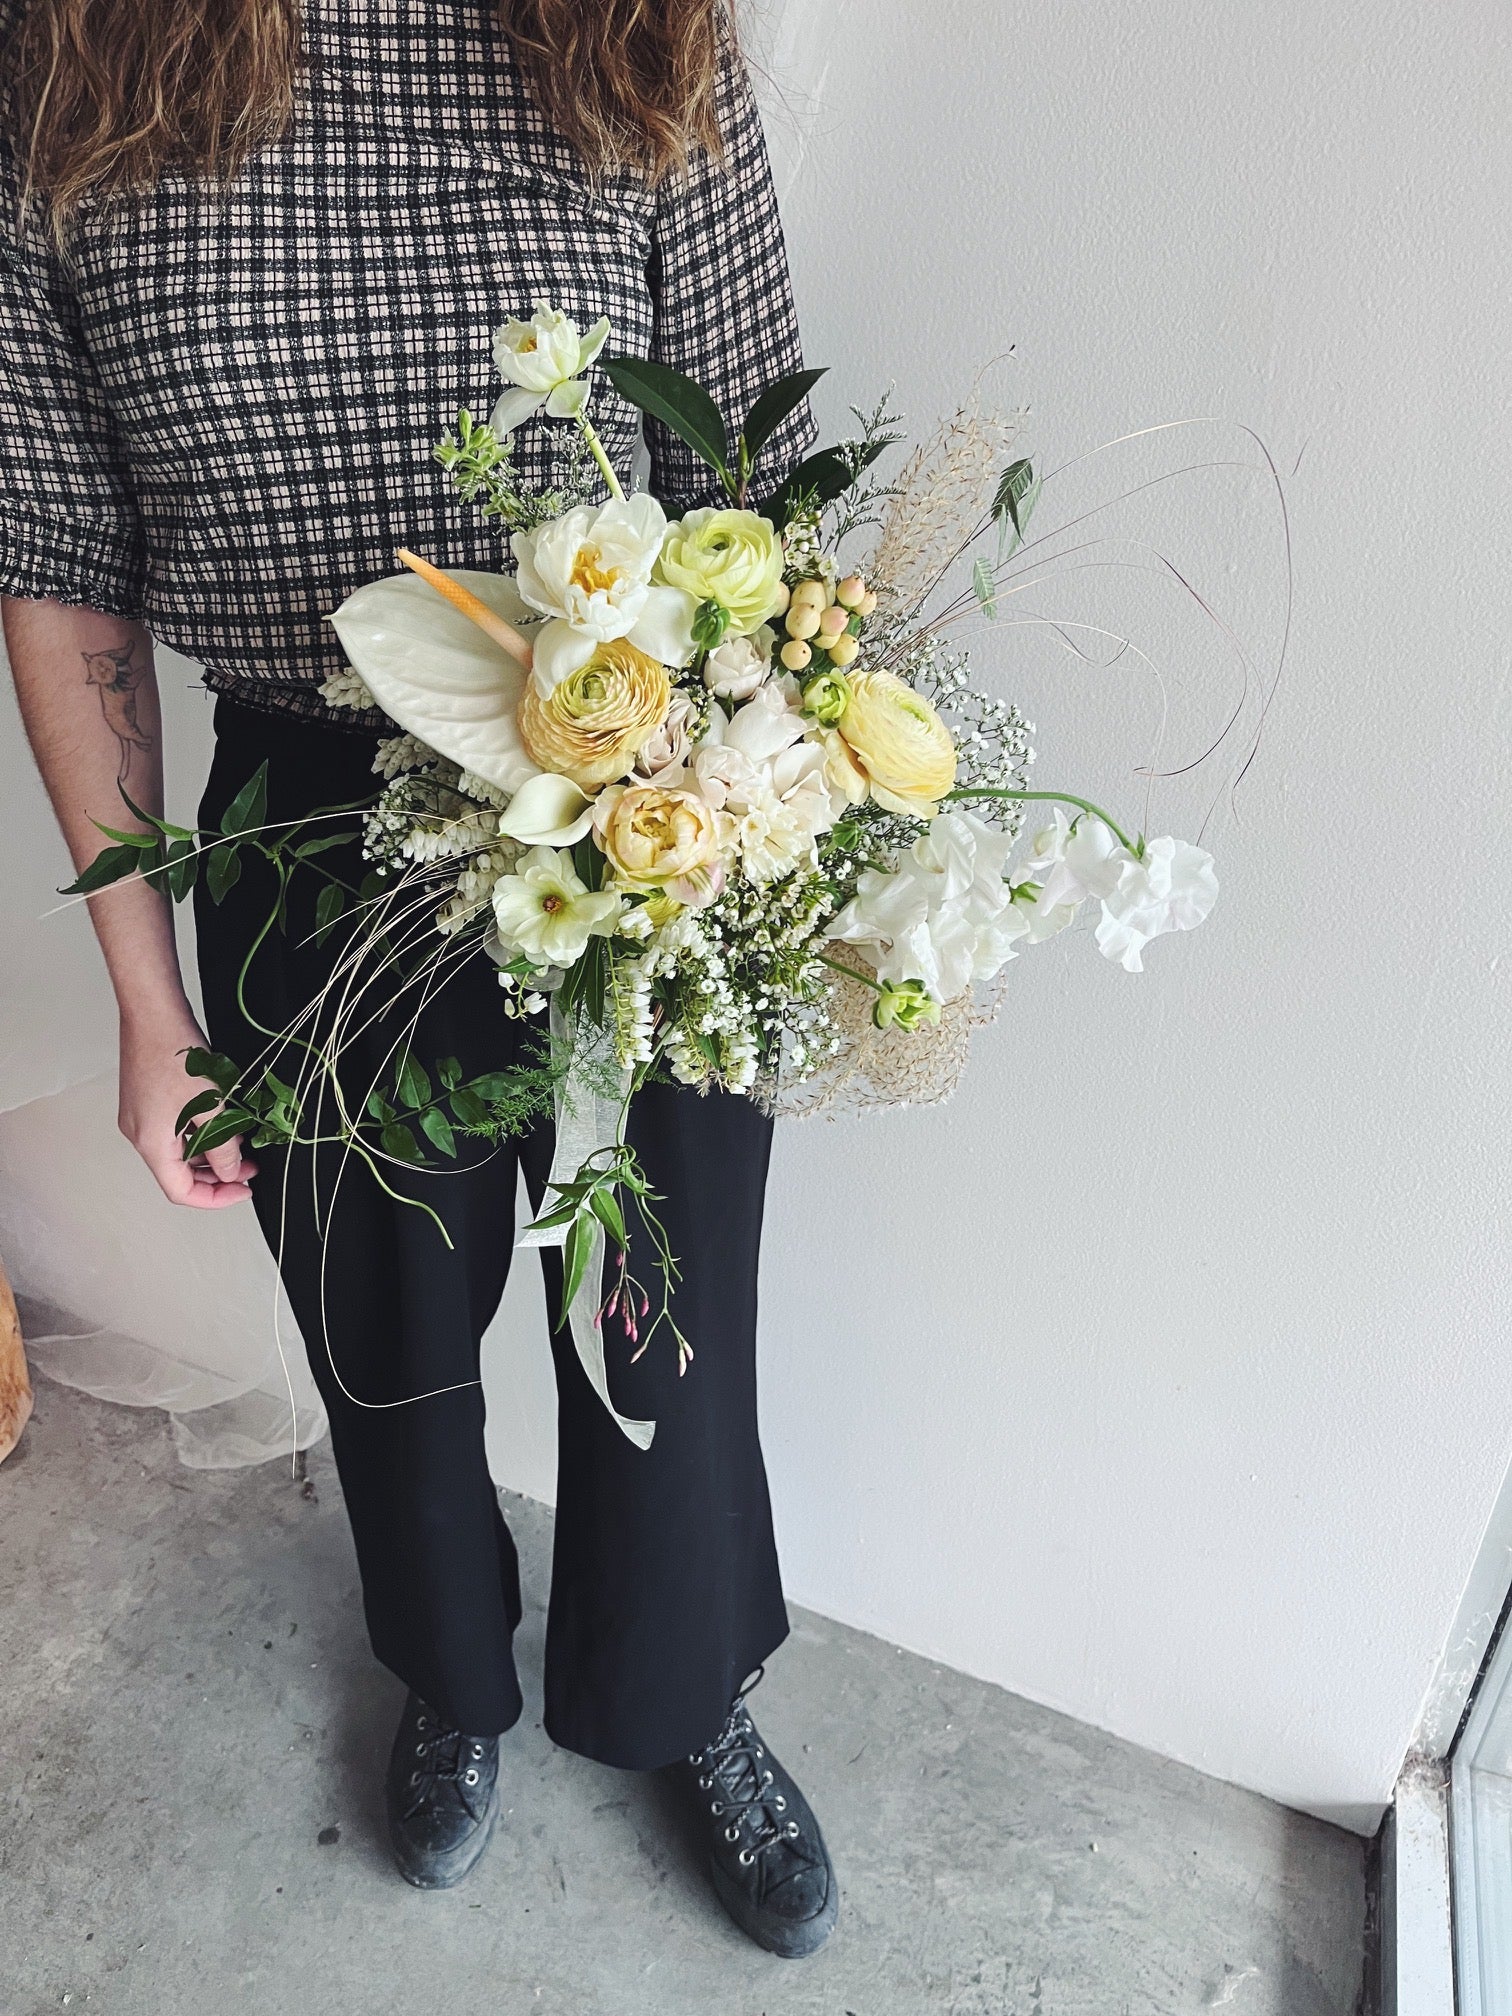 Flower Delivery Vancouver-The Wild Bunch Bridal Bouquet-Wedding Flowers-Florist-The Wild Bunch Flower Shop